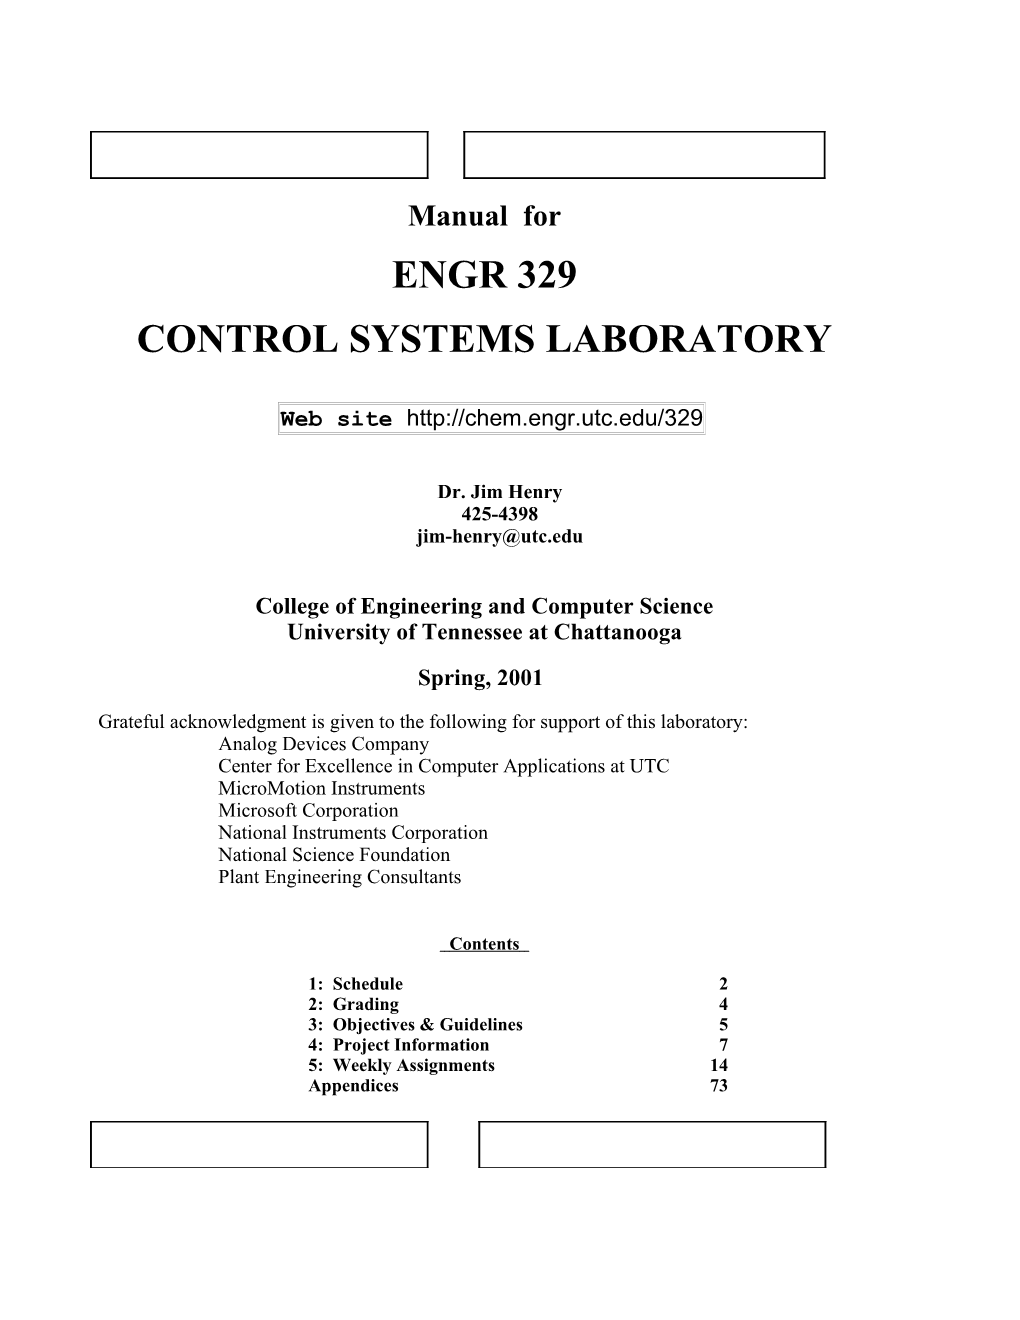 ENGR 329 Lab Manual